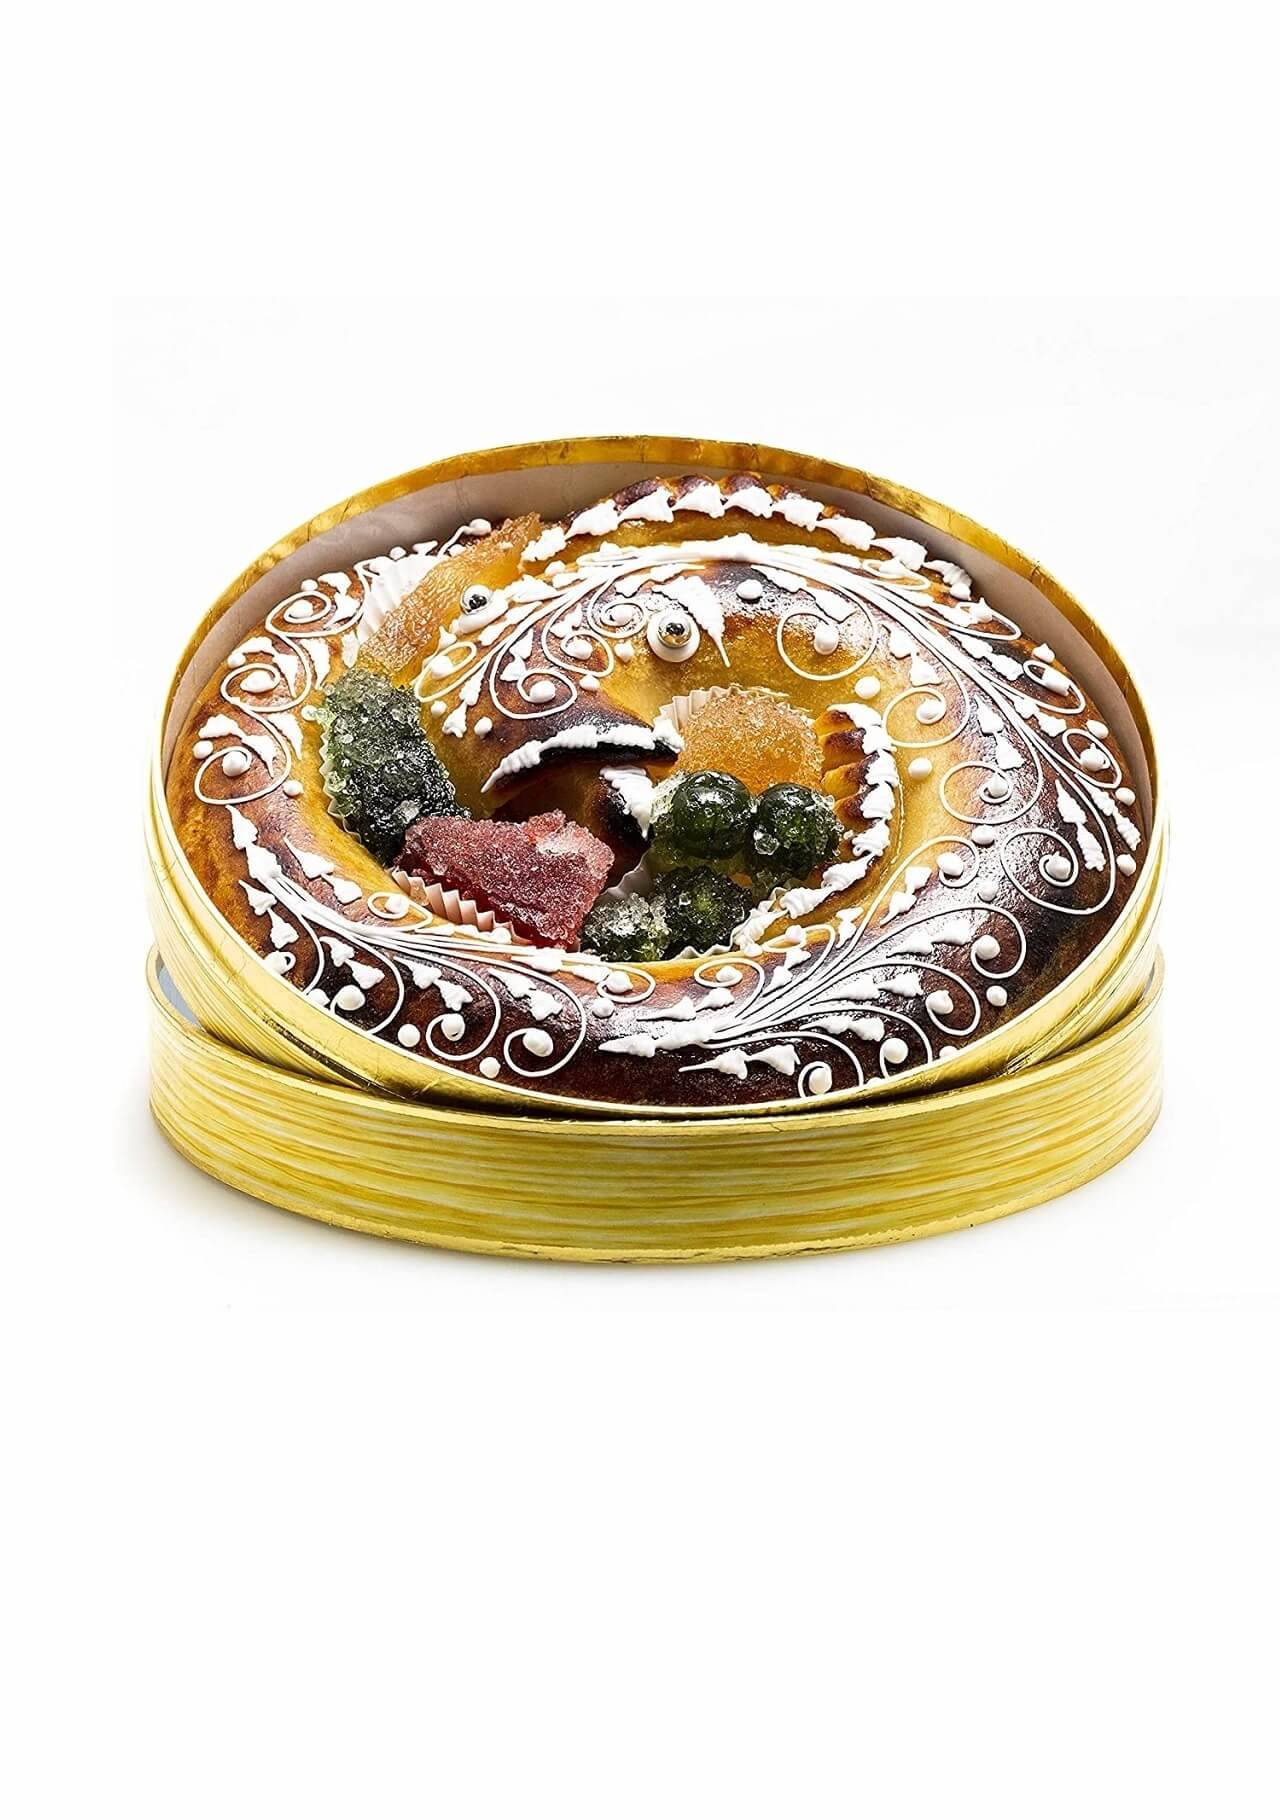 Regalos gourmet anguila de mazapán Barroso Amazon, 22,69€